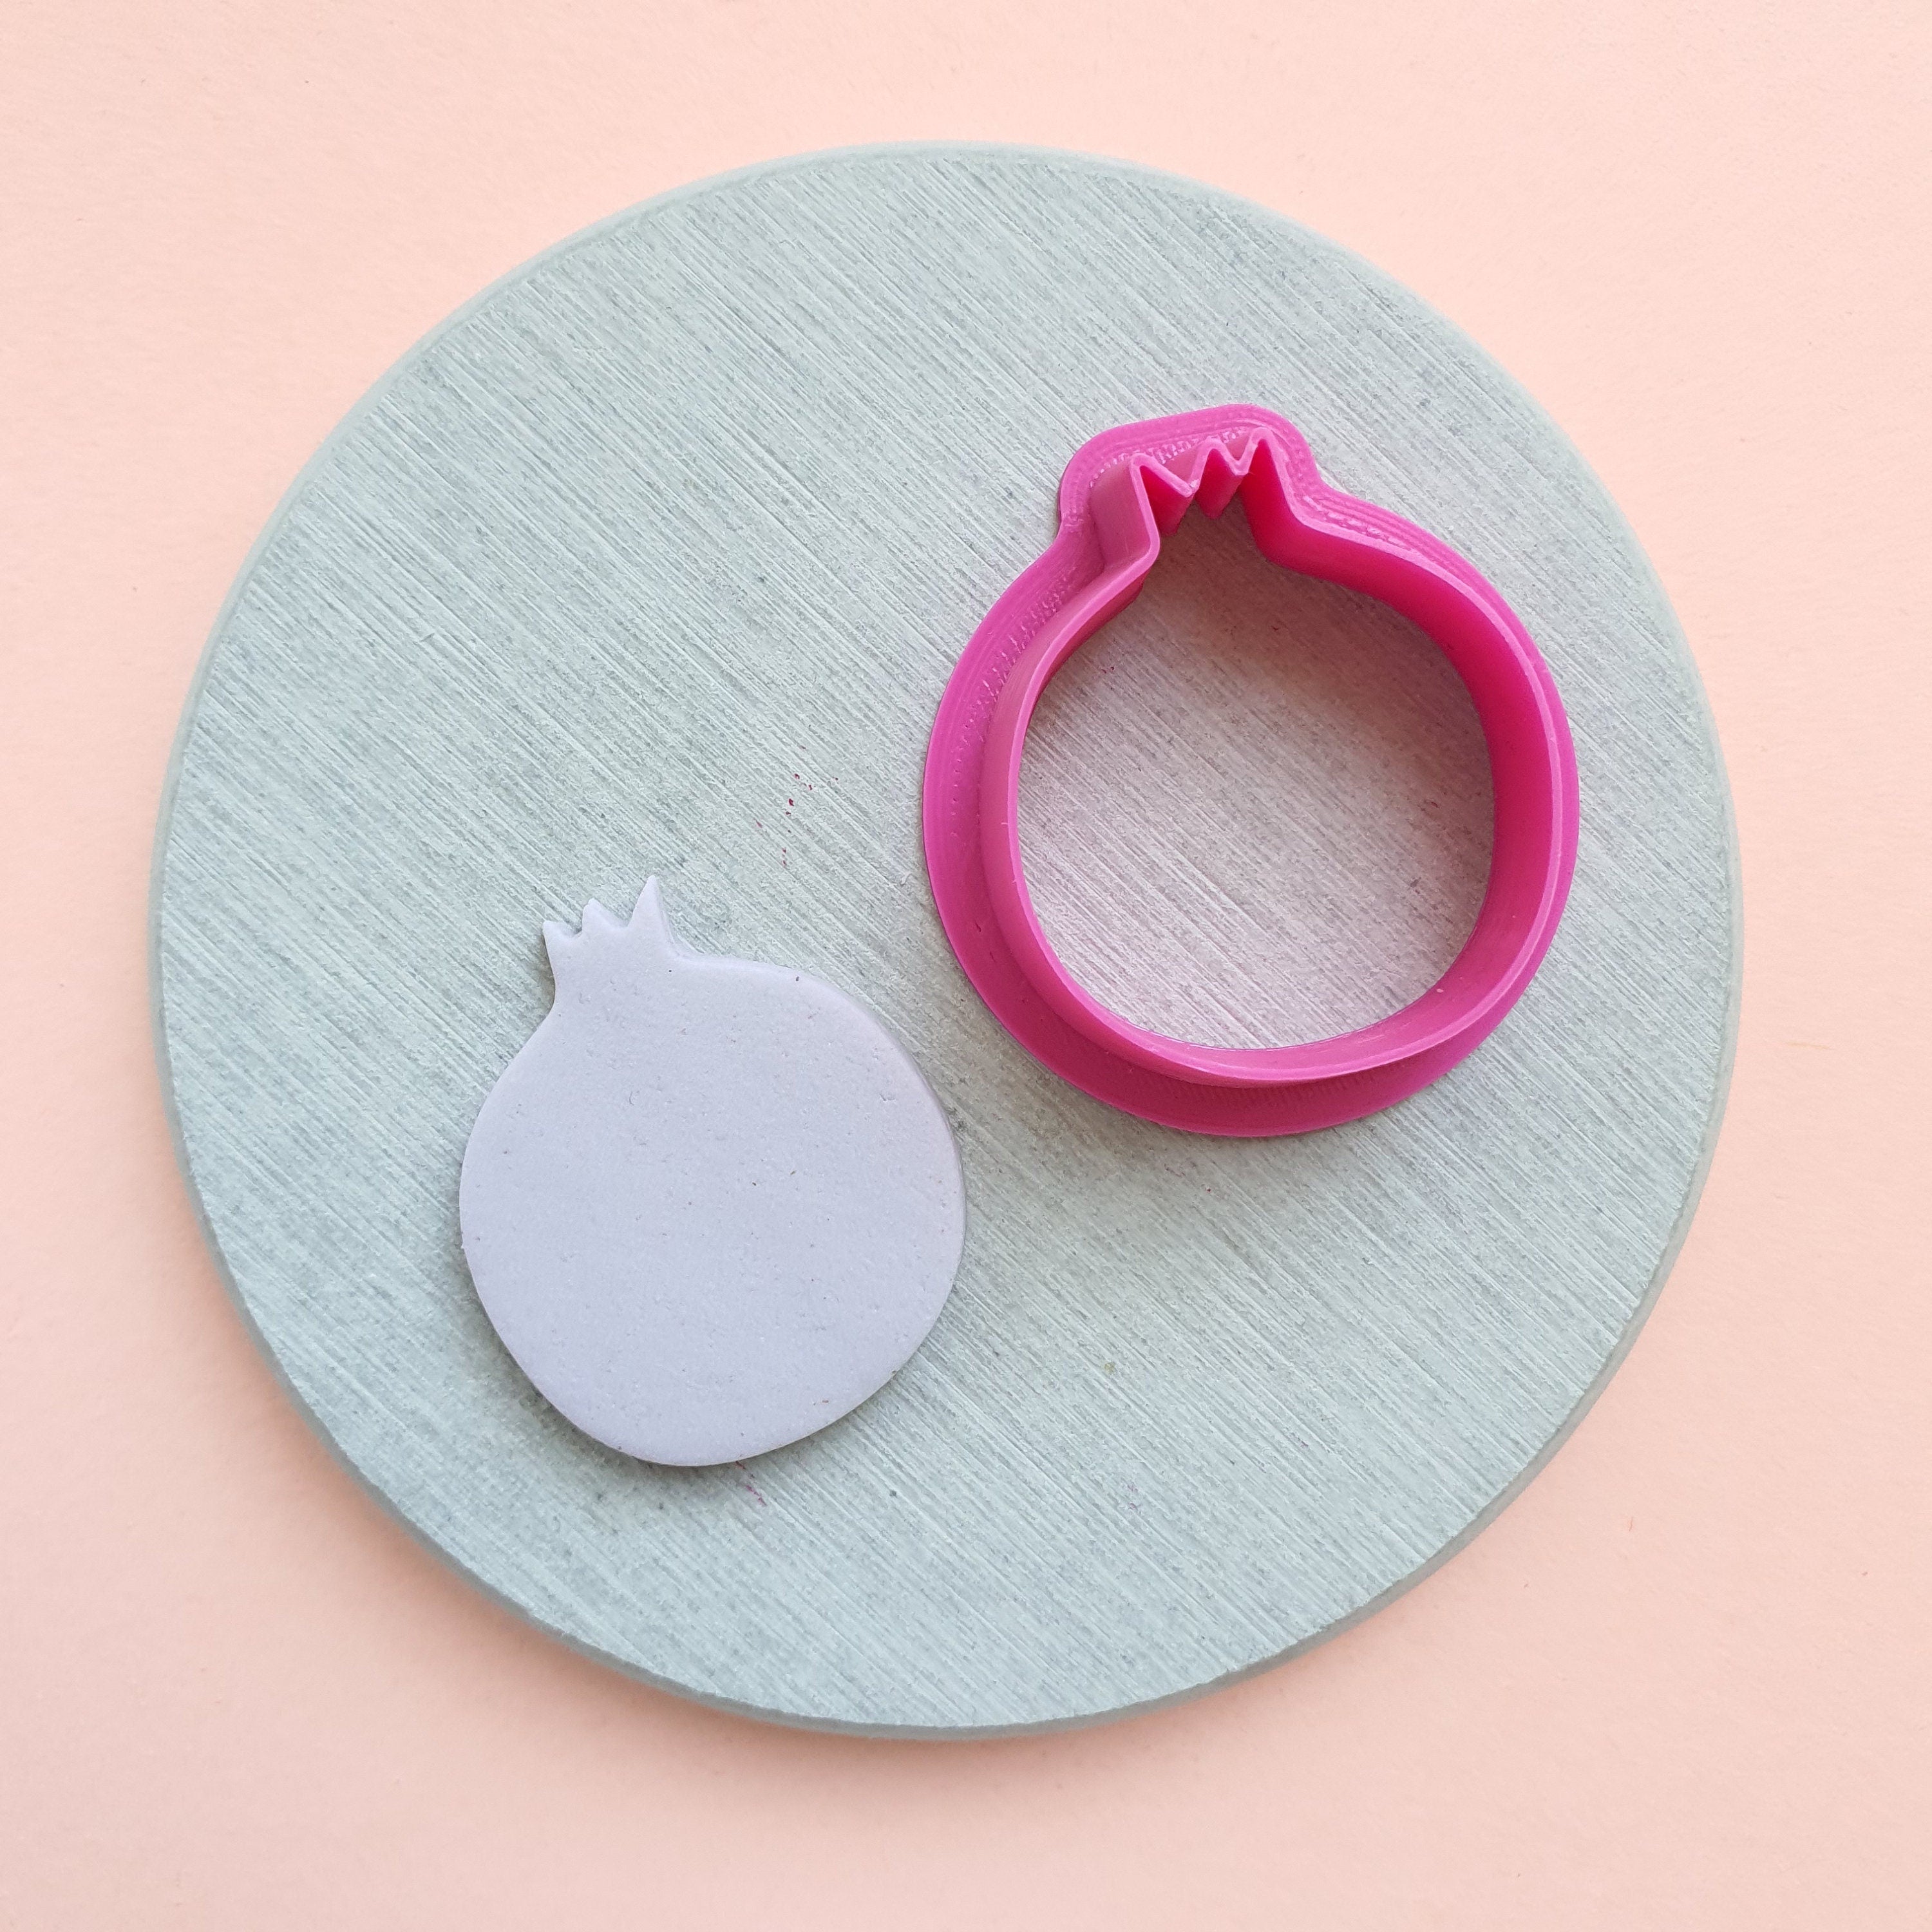 Polymer clay cutter 3D print cutters Jewelry Earrings Pomegranate shape  plastic cutter